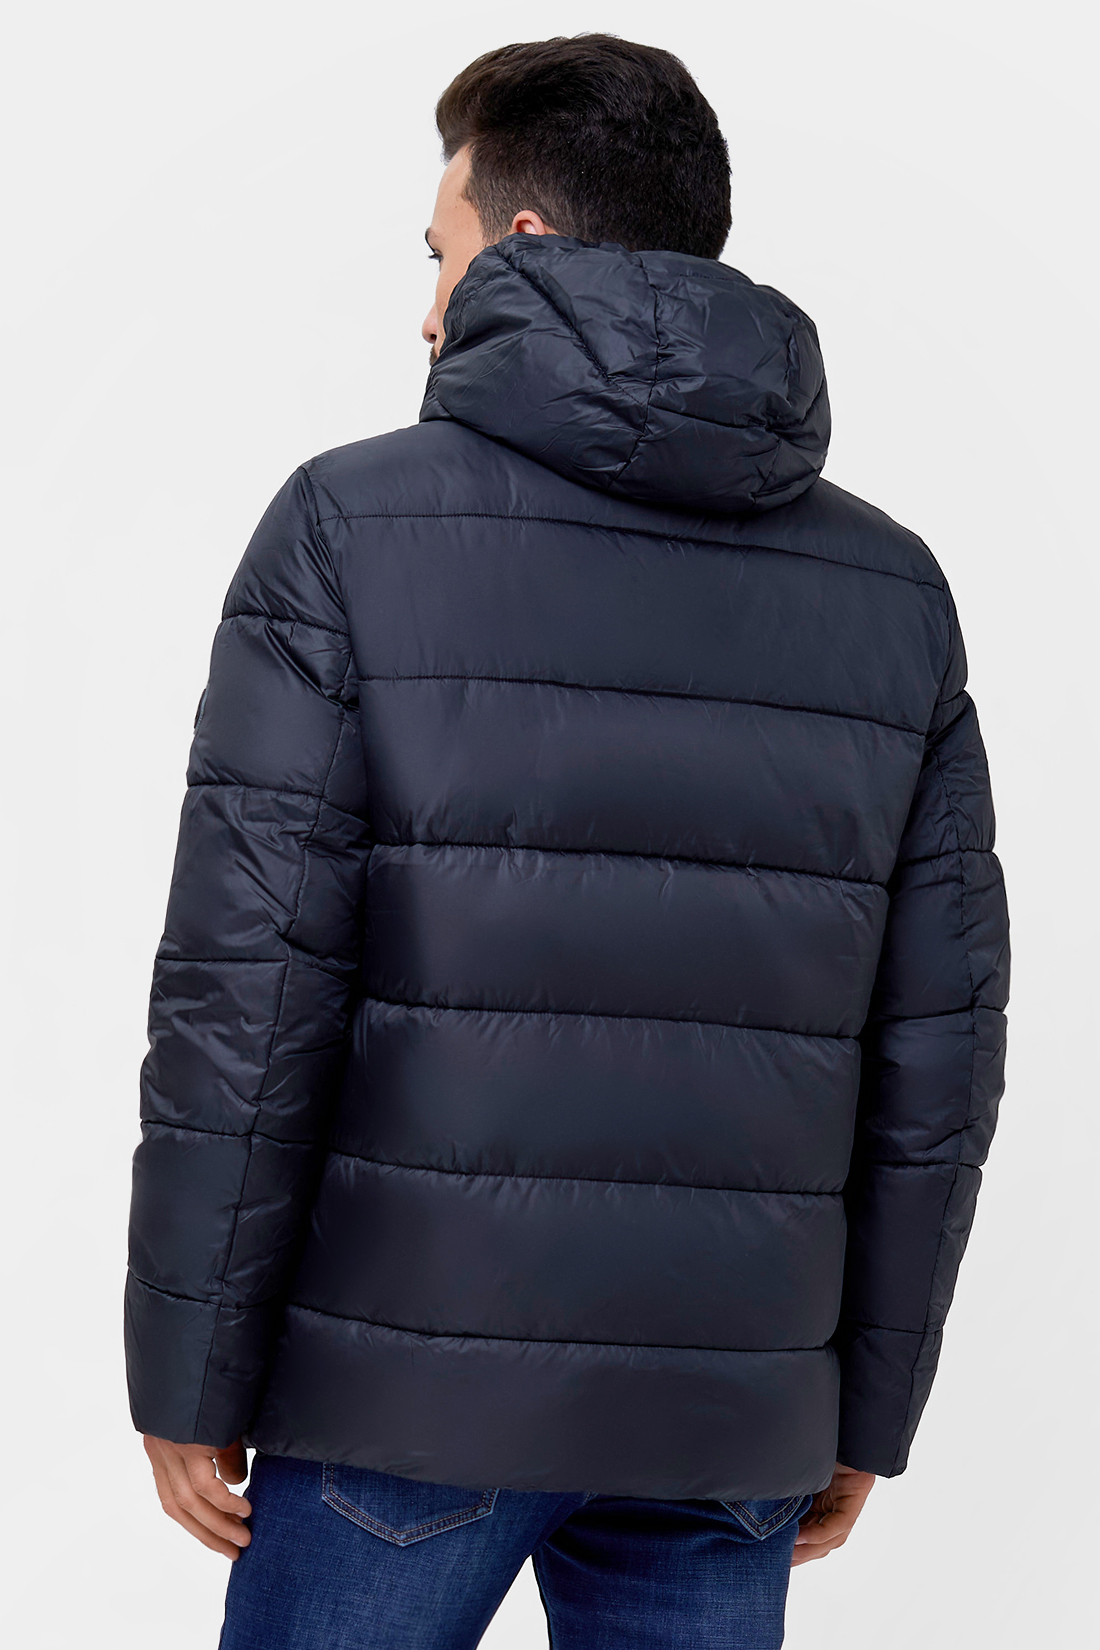 Куртка (Эко пух) (арт. baon B540501), размер 3XL, цвет черный Куртка (Эко пух) (арт. baon B540501) - фото 2